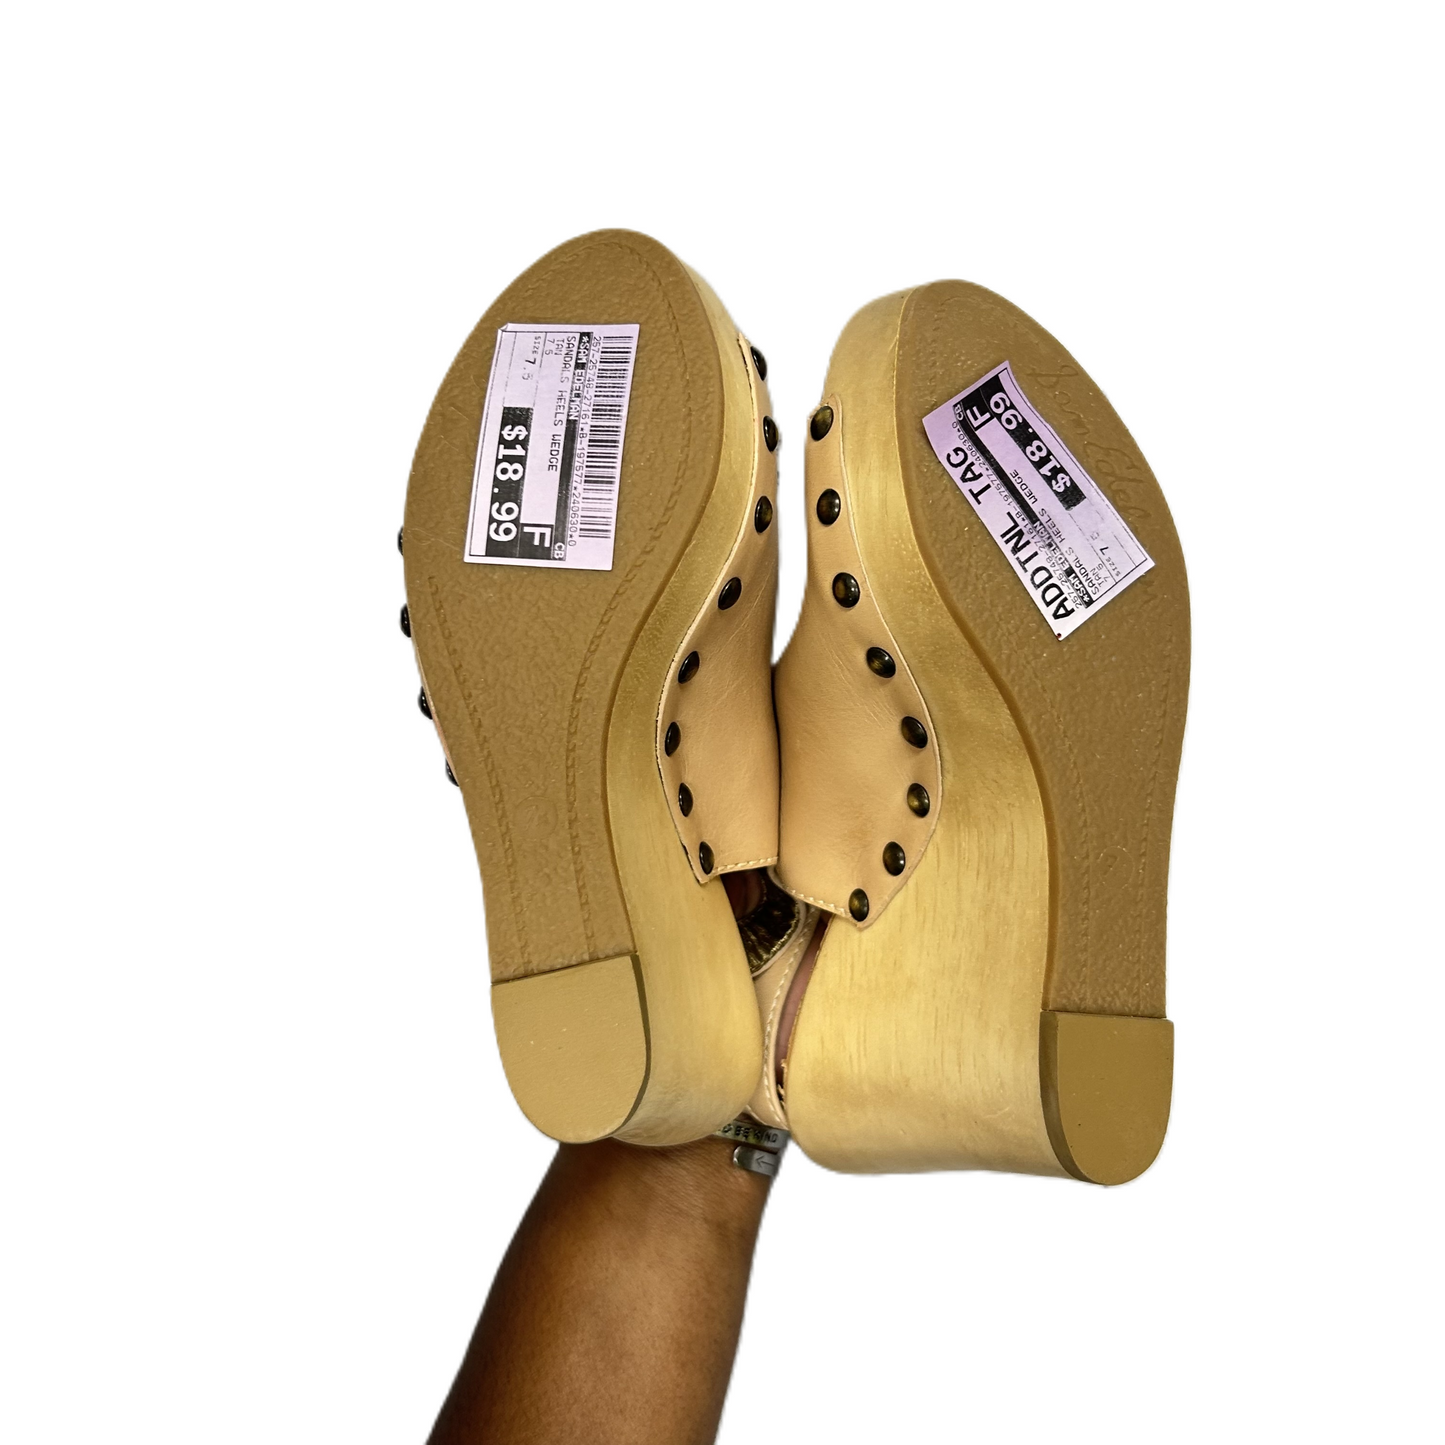 Tan Sandals Heels Wedge By Sam Edelman, Size: 7.5